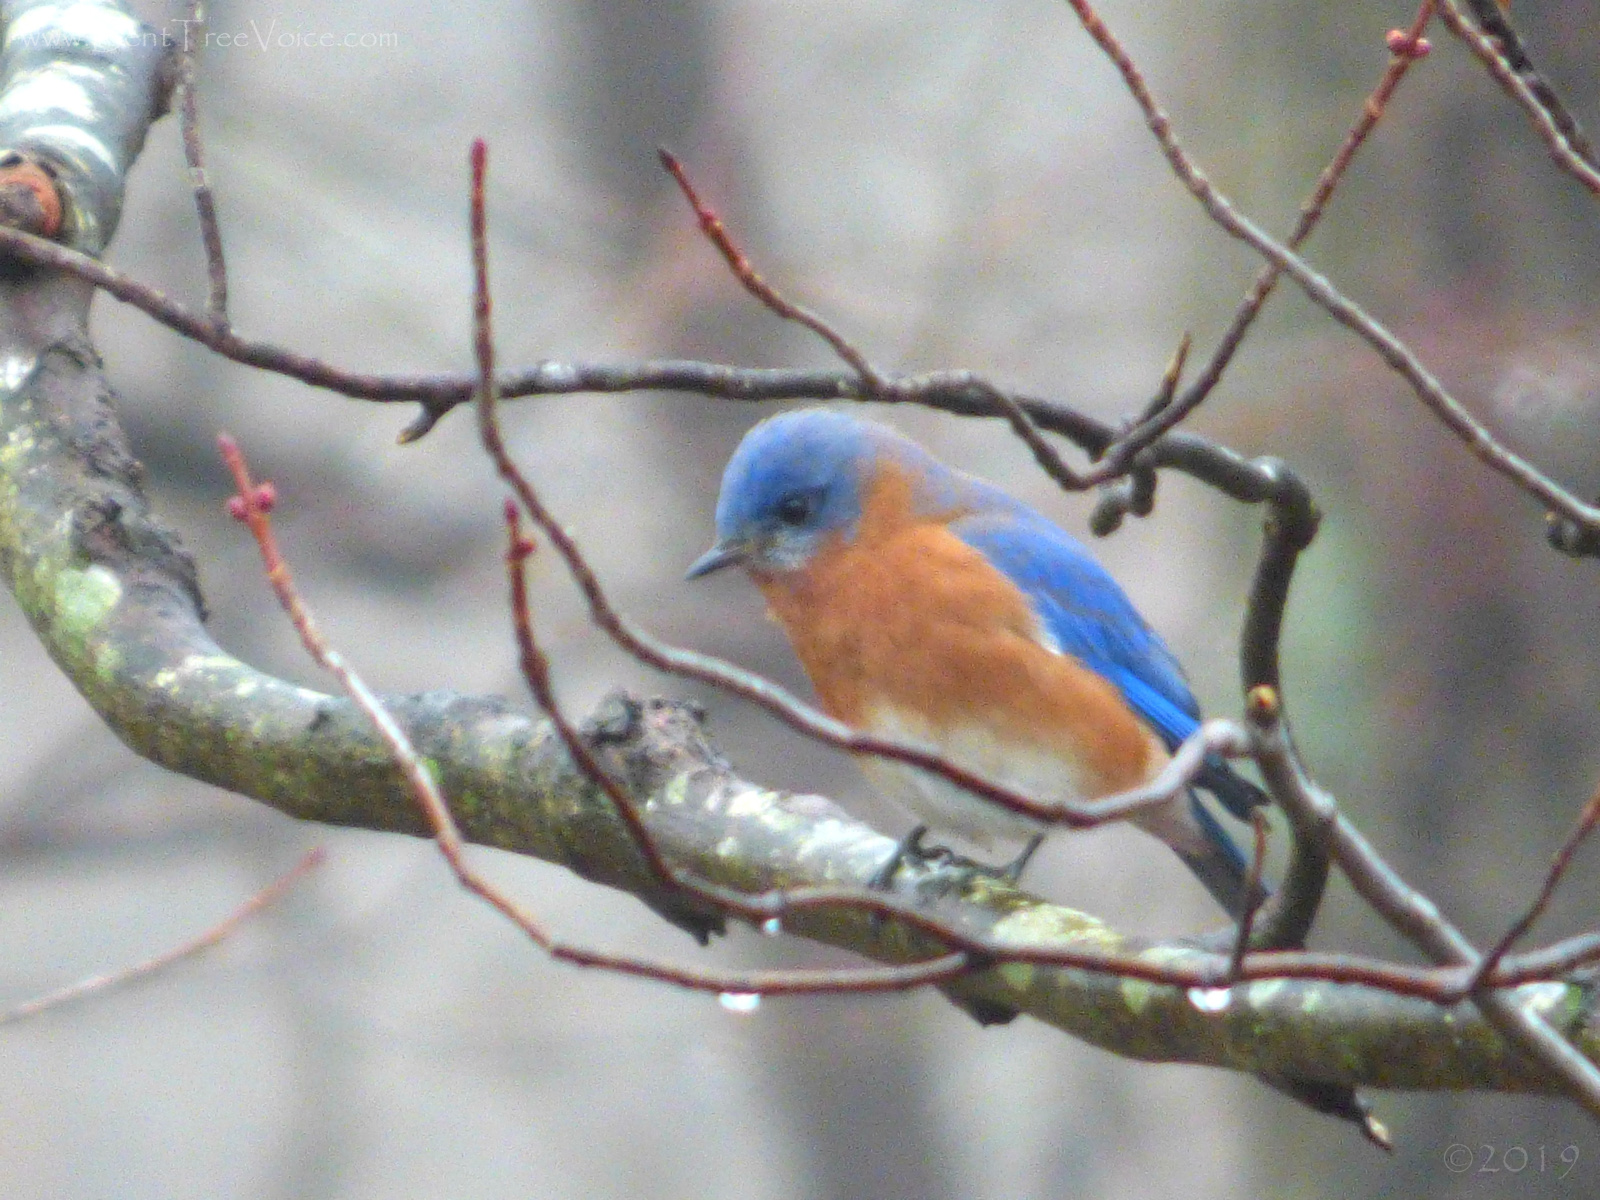 February 11, 2019 - Bluebird in Bent Tree